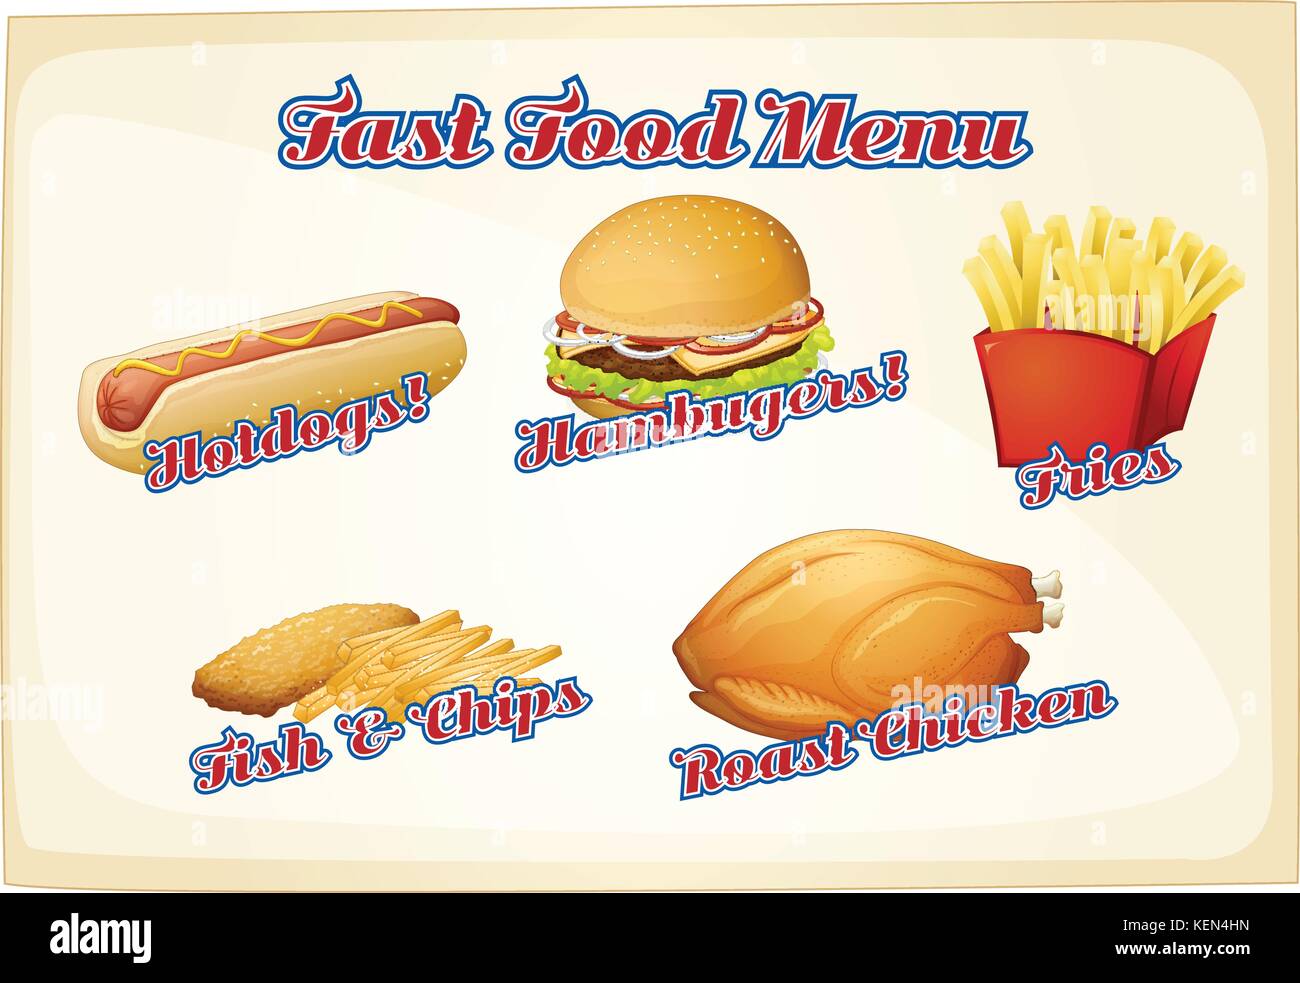 Fast food Menü mit verschiedenen Lebensmitteln Stock Vektor